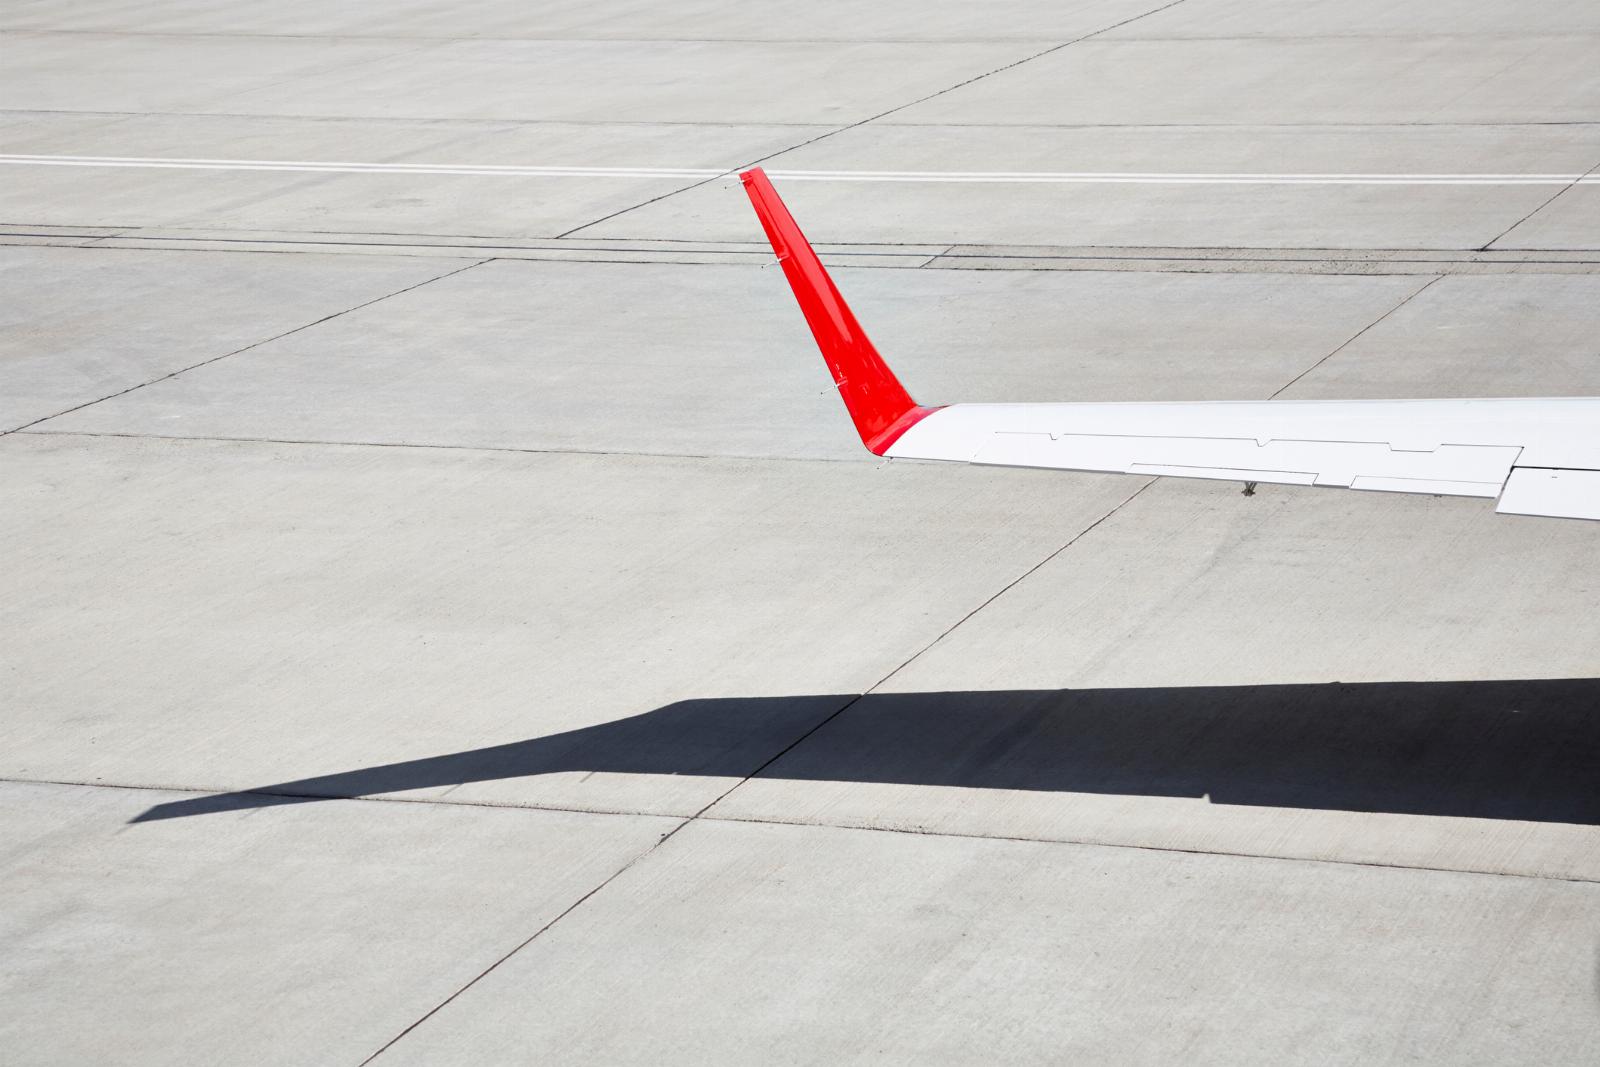 Fetcherr raises $12.5M to dynamically price airfare with algorithms